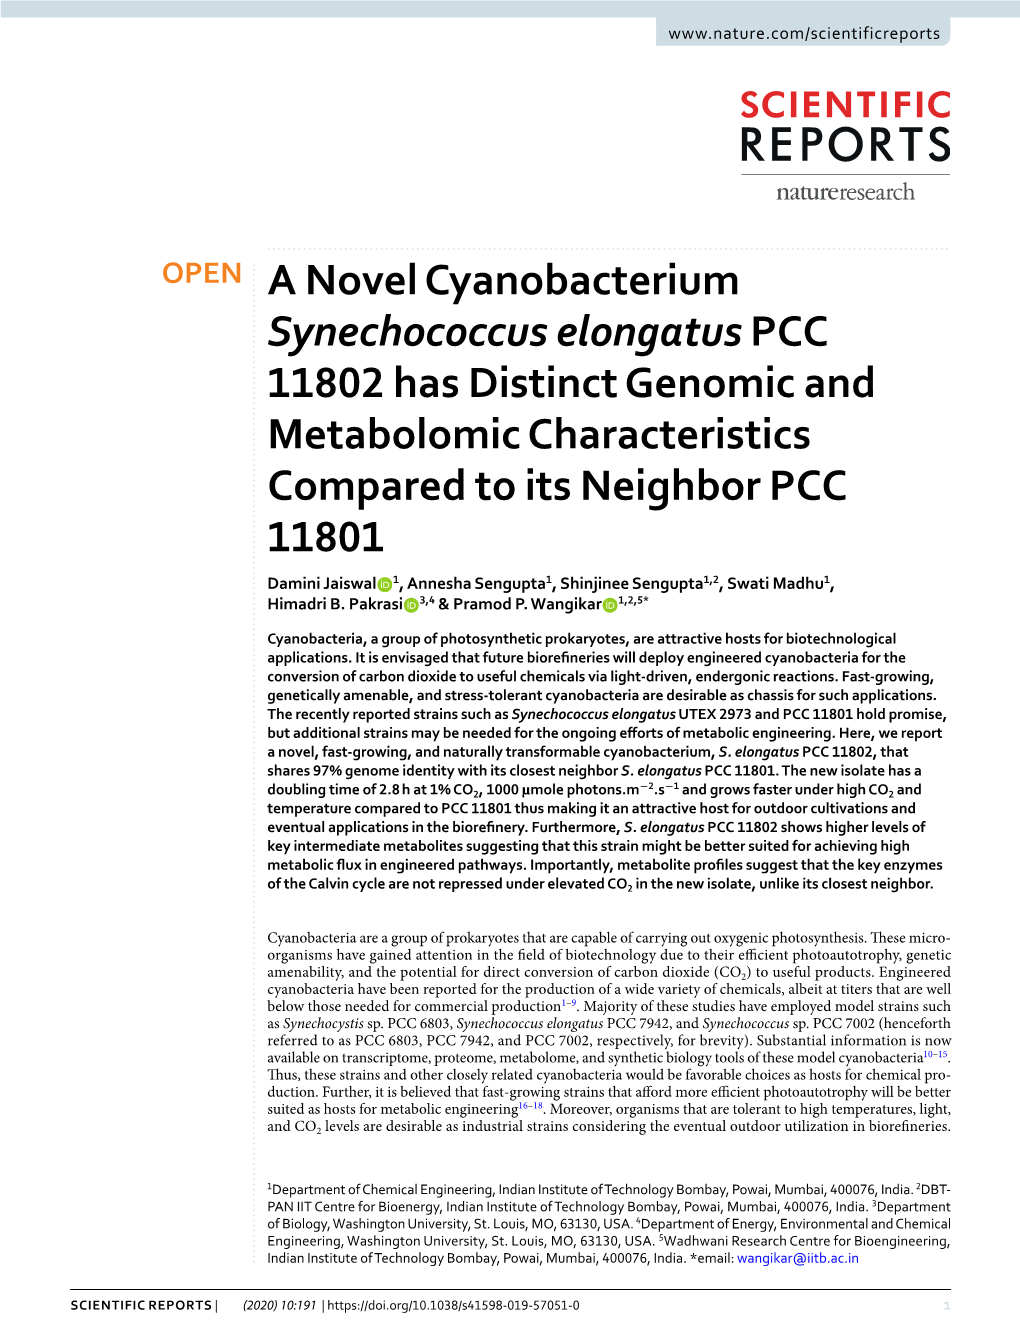 A Novel Cyanobacterium Synechococcus Elongatus PCC 11802 Has Distinct Genomic and Metabolomic Characteristics Compared to Its Ne